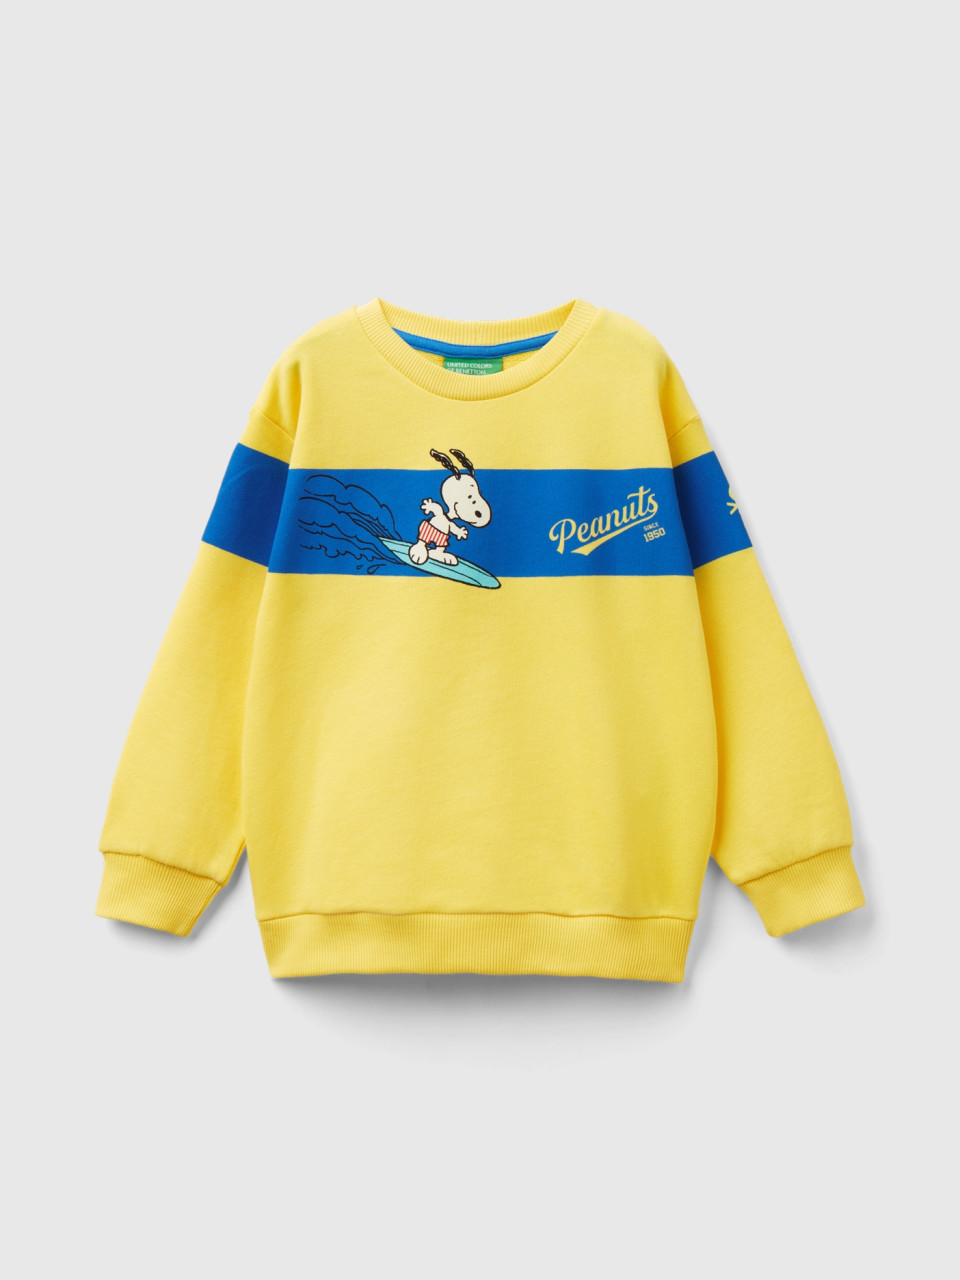 Benetton, ©peanuts Sweatshirt With Stripes, Yellow, Kids